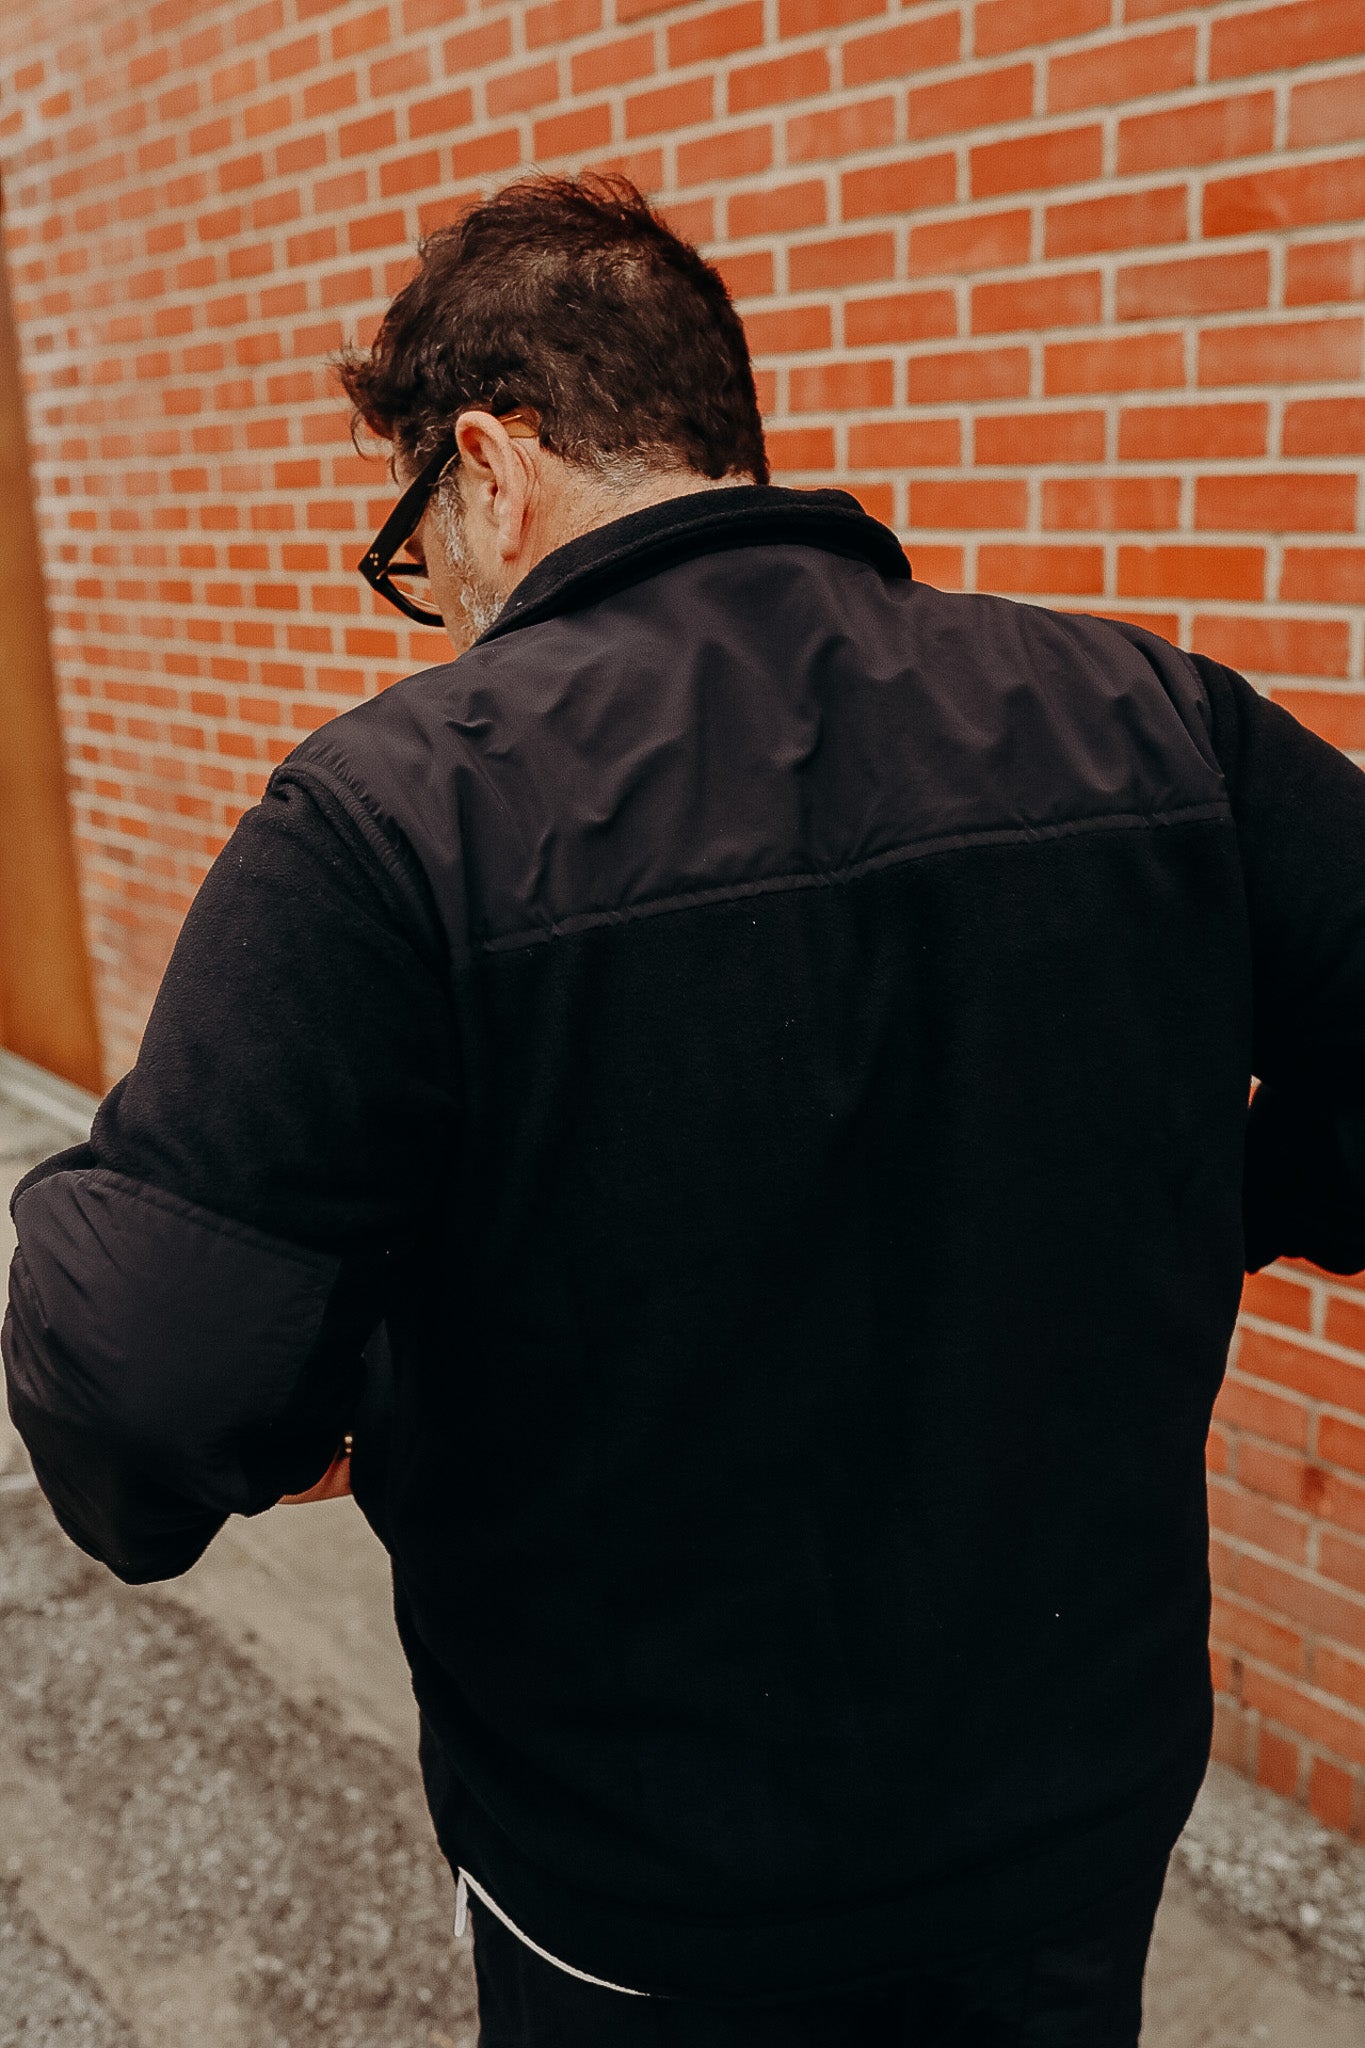 Fleece Jacket in Black